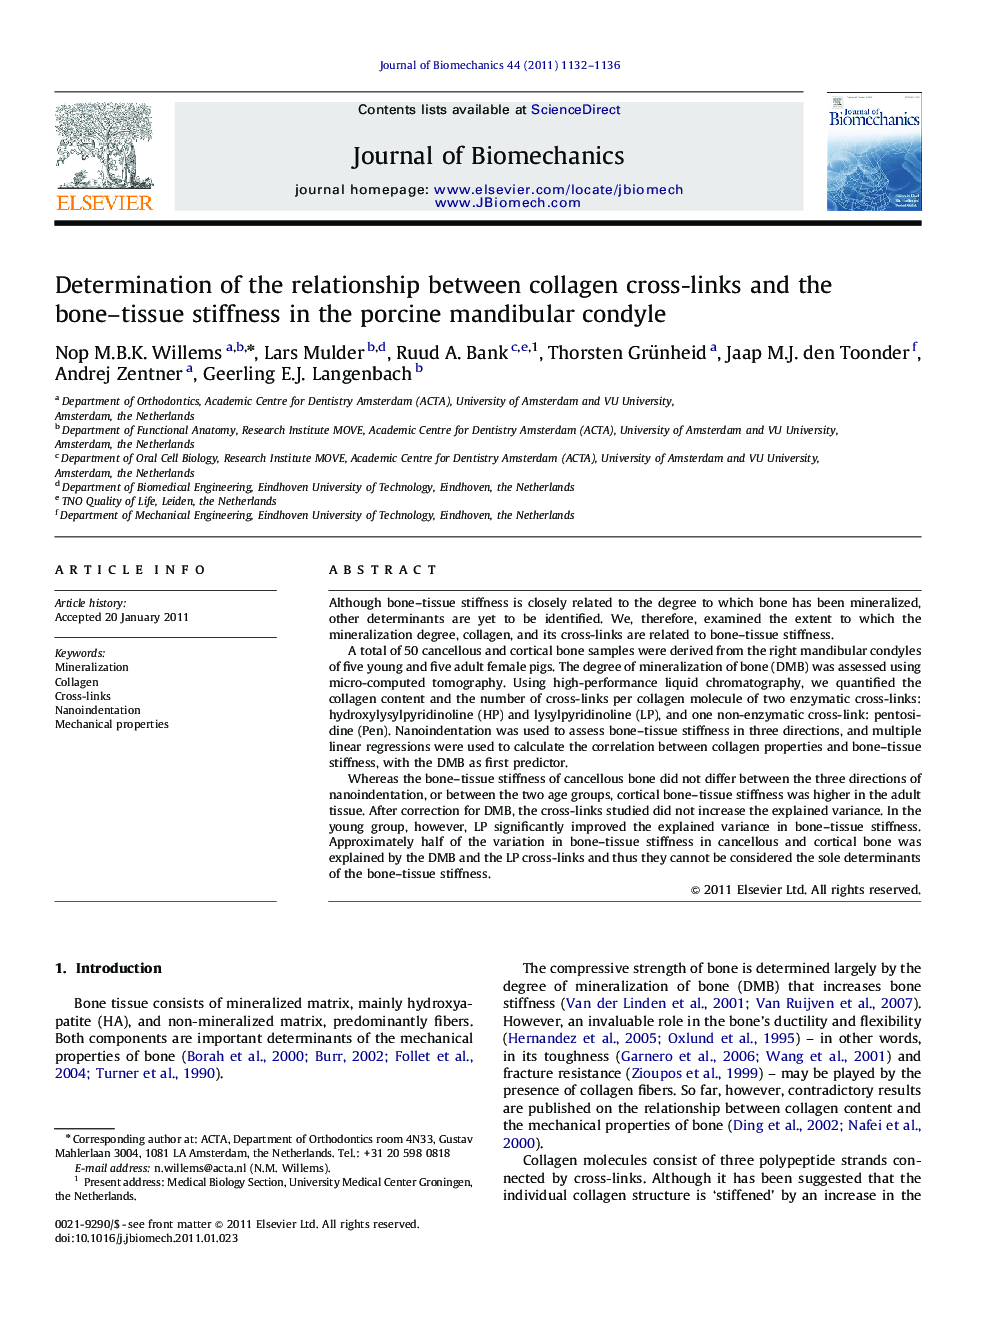 Determination of the relationship between collagen cross-links and the bone-tissue stiffness in the porcine mandibular condyle